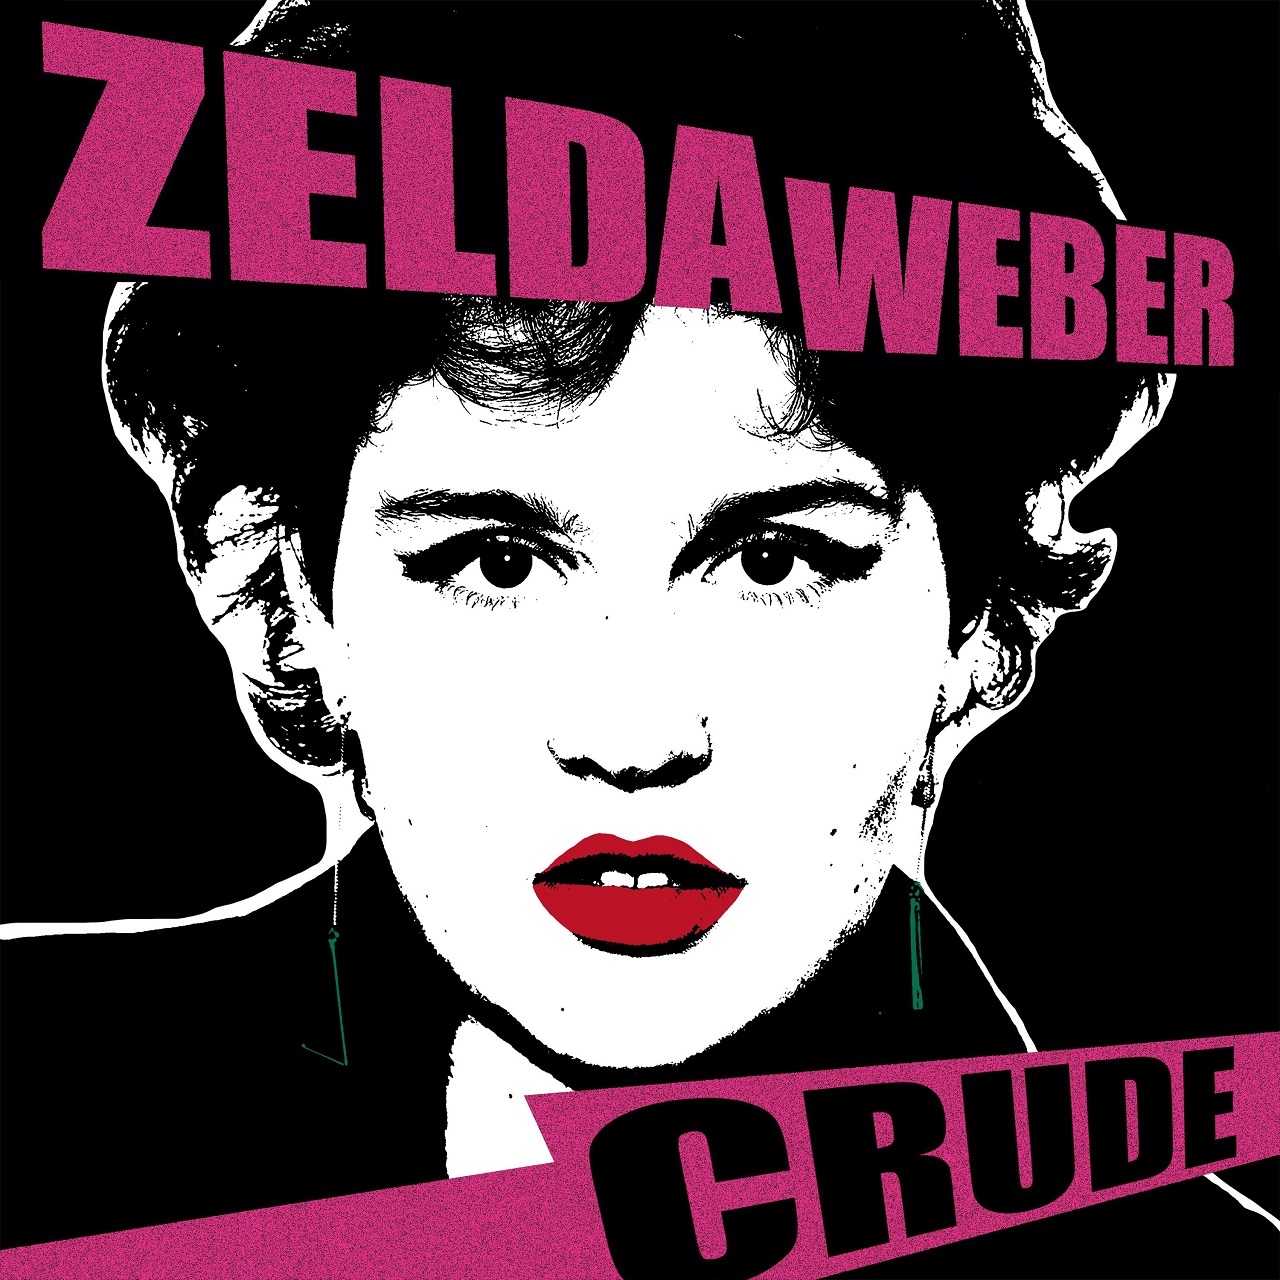 Zelda Weber Crude Albumcover